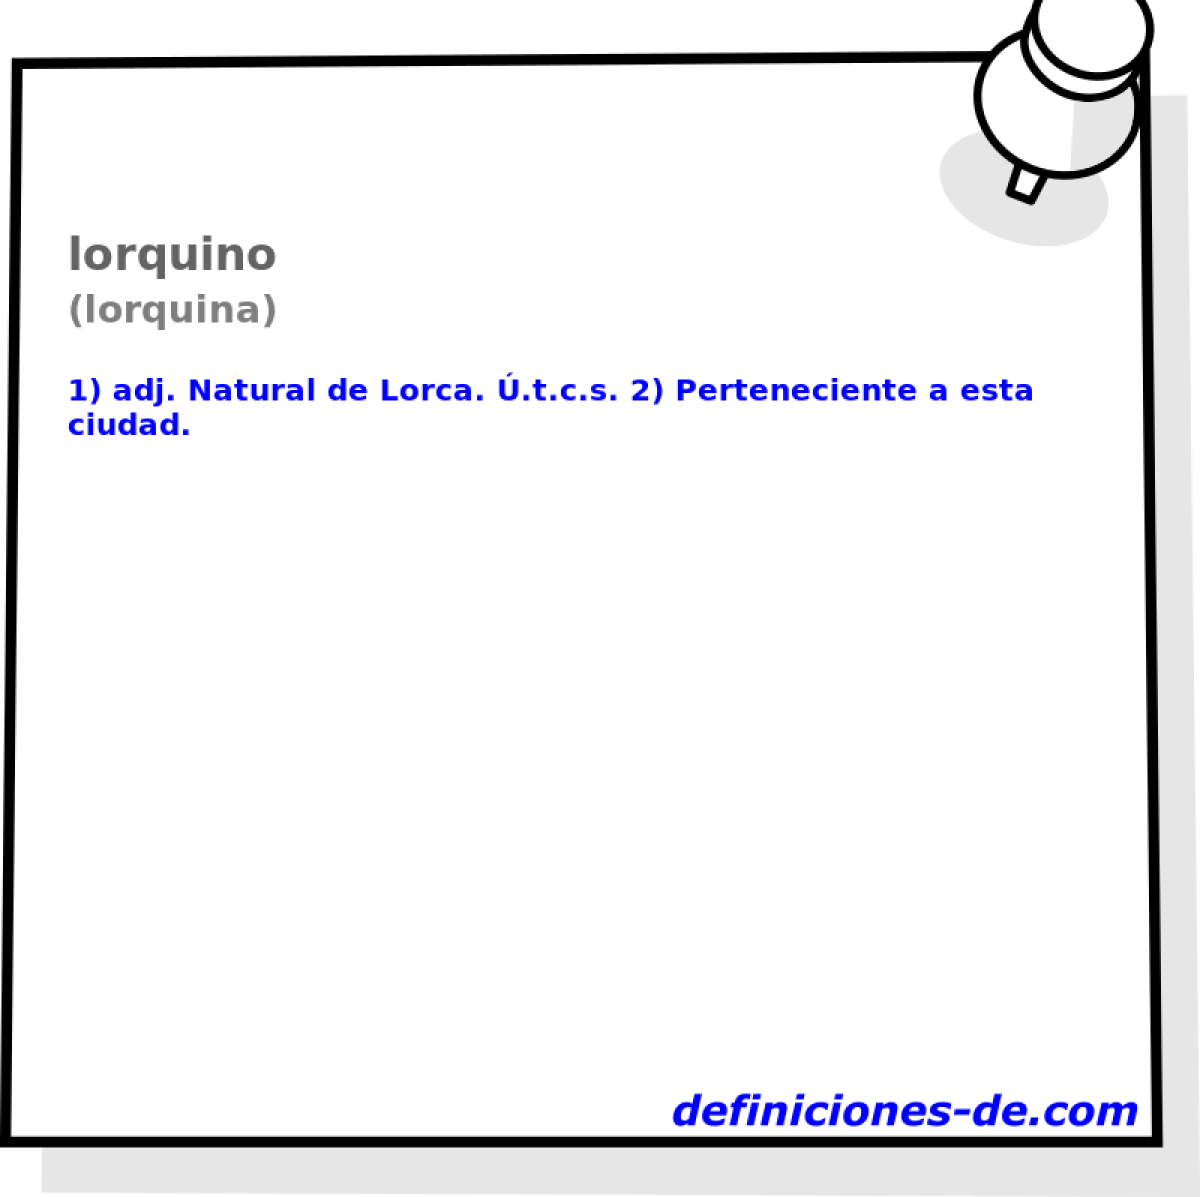 lorquino (lorquina)